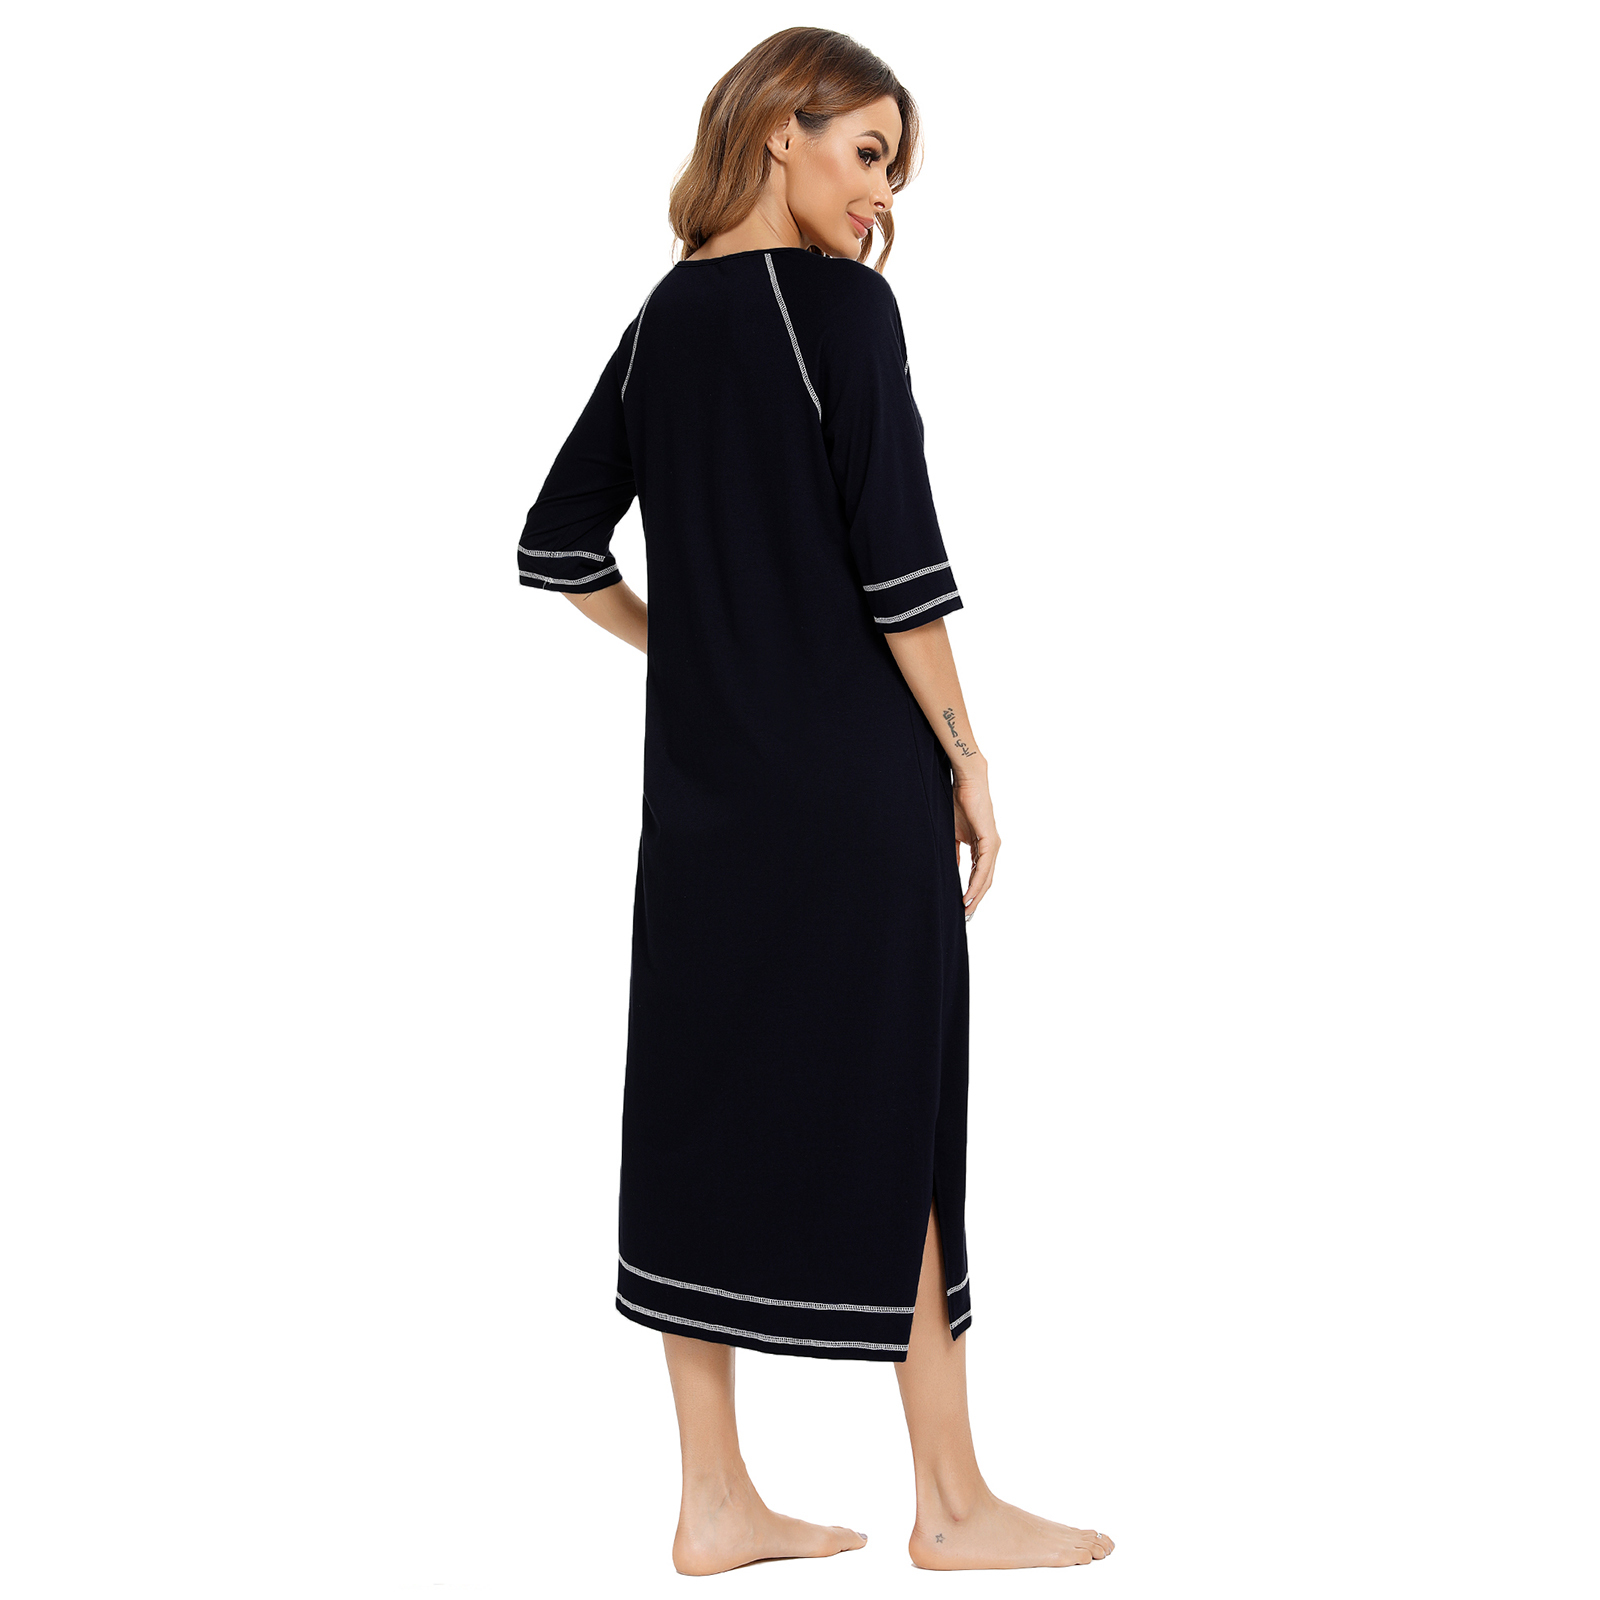 LOFIR Women Zipper Front Robes 3/4 Sleeve Loungewear Pockets Nightgown Loose-Fitting Ladies Long Sleepwear(Black,M) - image 5 of 5